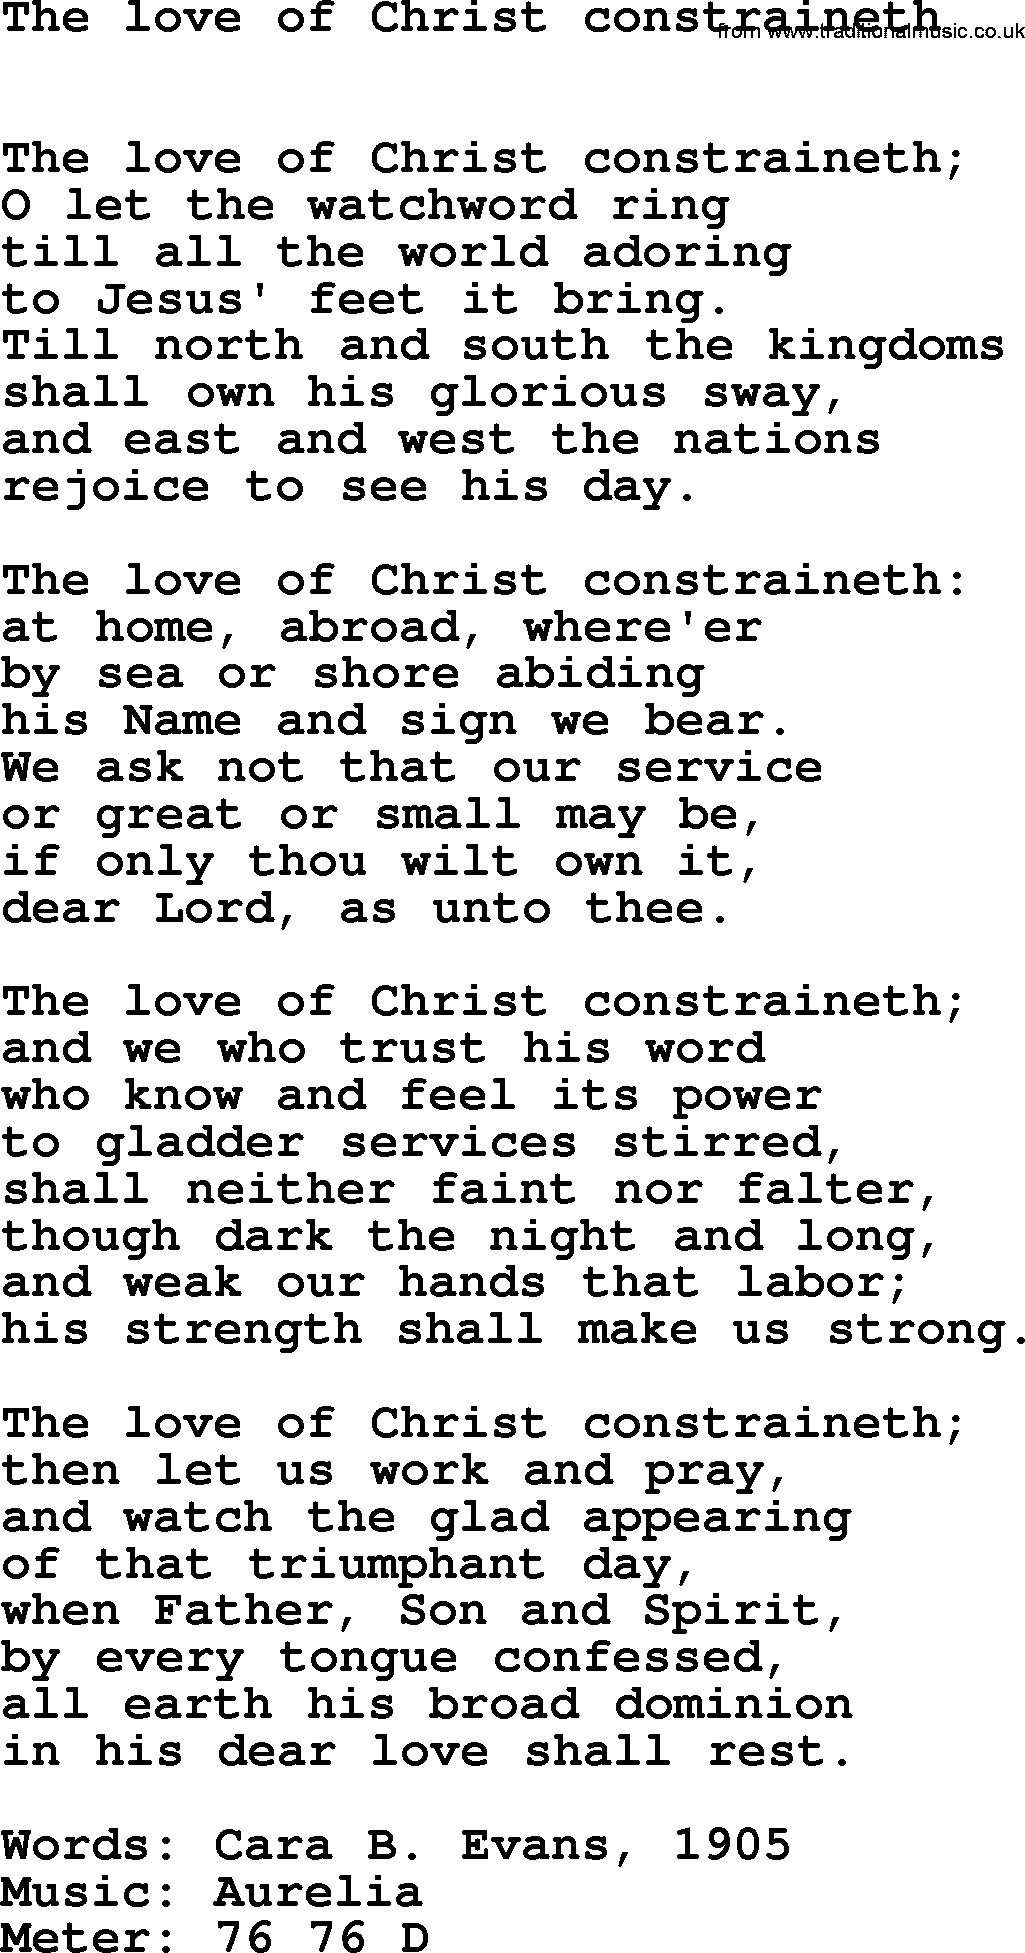 Book of Common Praise Hymn: The Love Of Christ Constraineth.txt lyrics with midi music